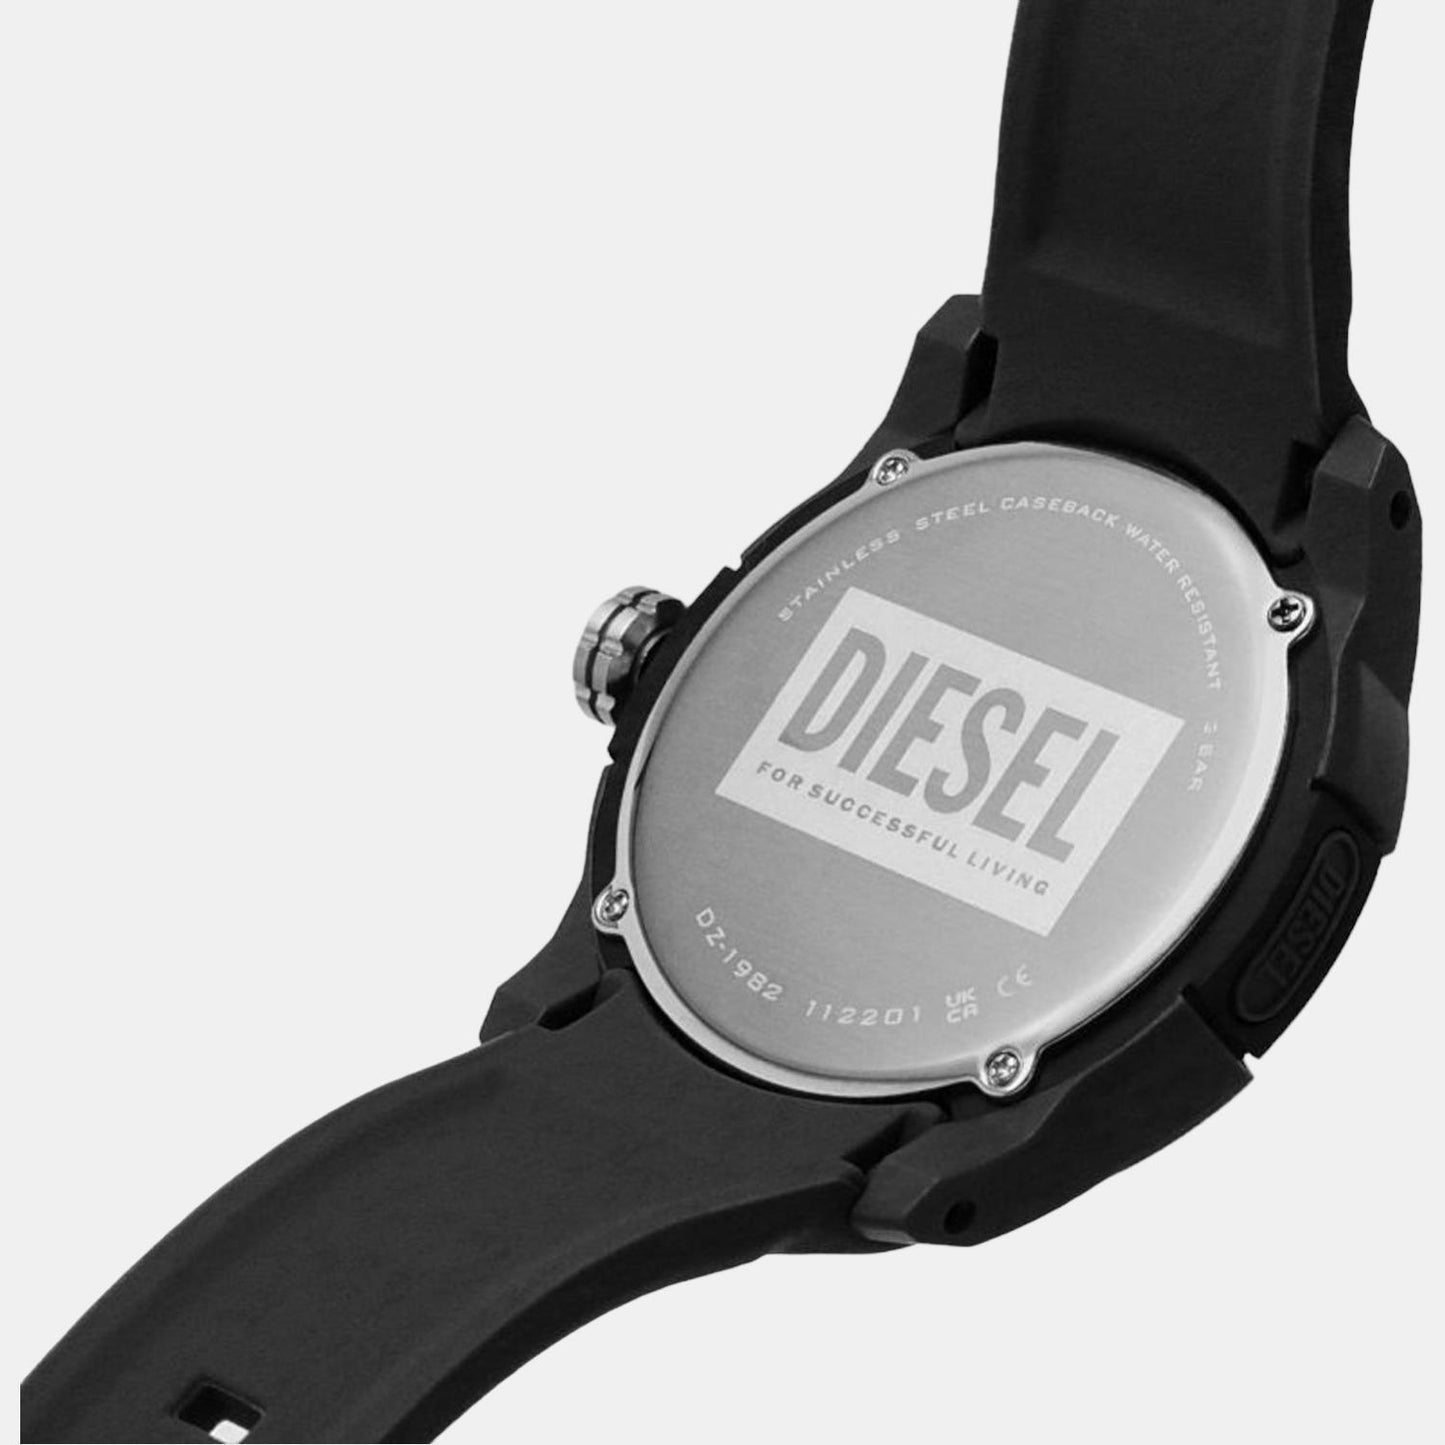 diesel-nylon-brown-and-blue-analog-male-watch-dz1982